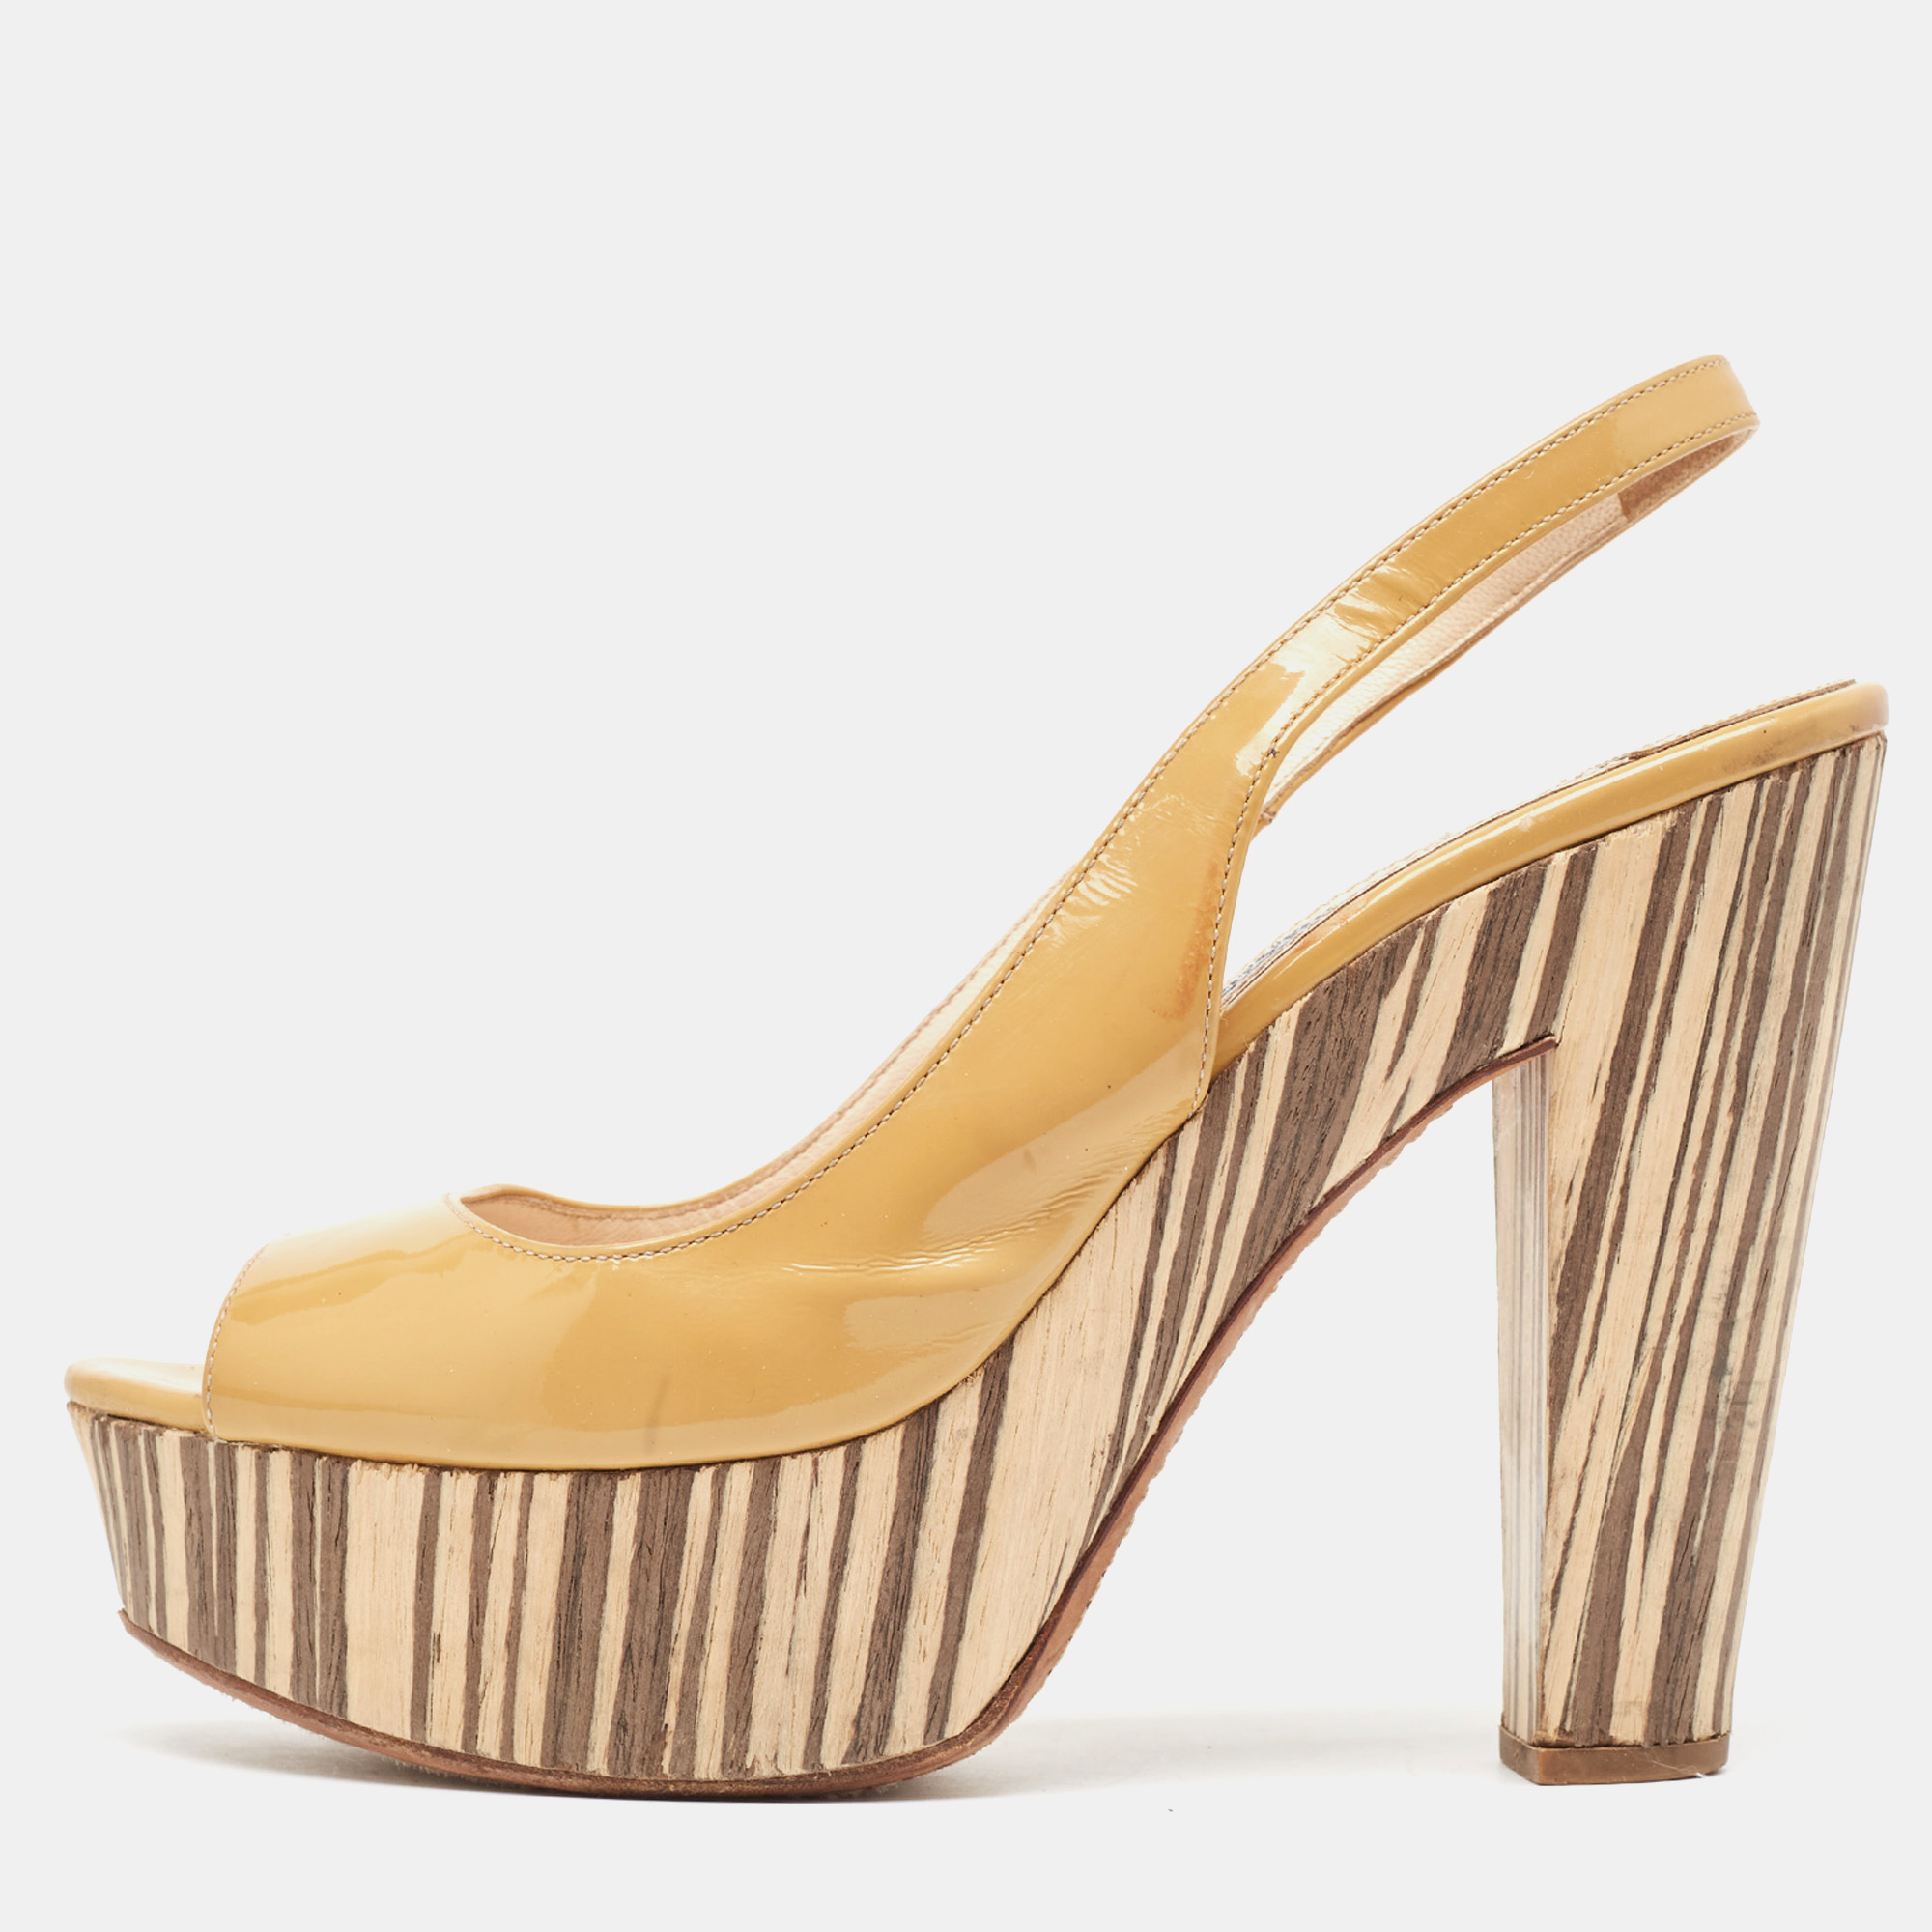 Prada beige patent leather open toe platform slingback sandals size 37